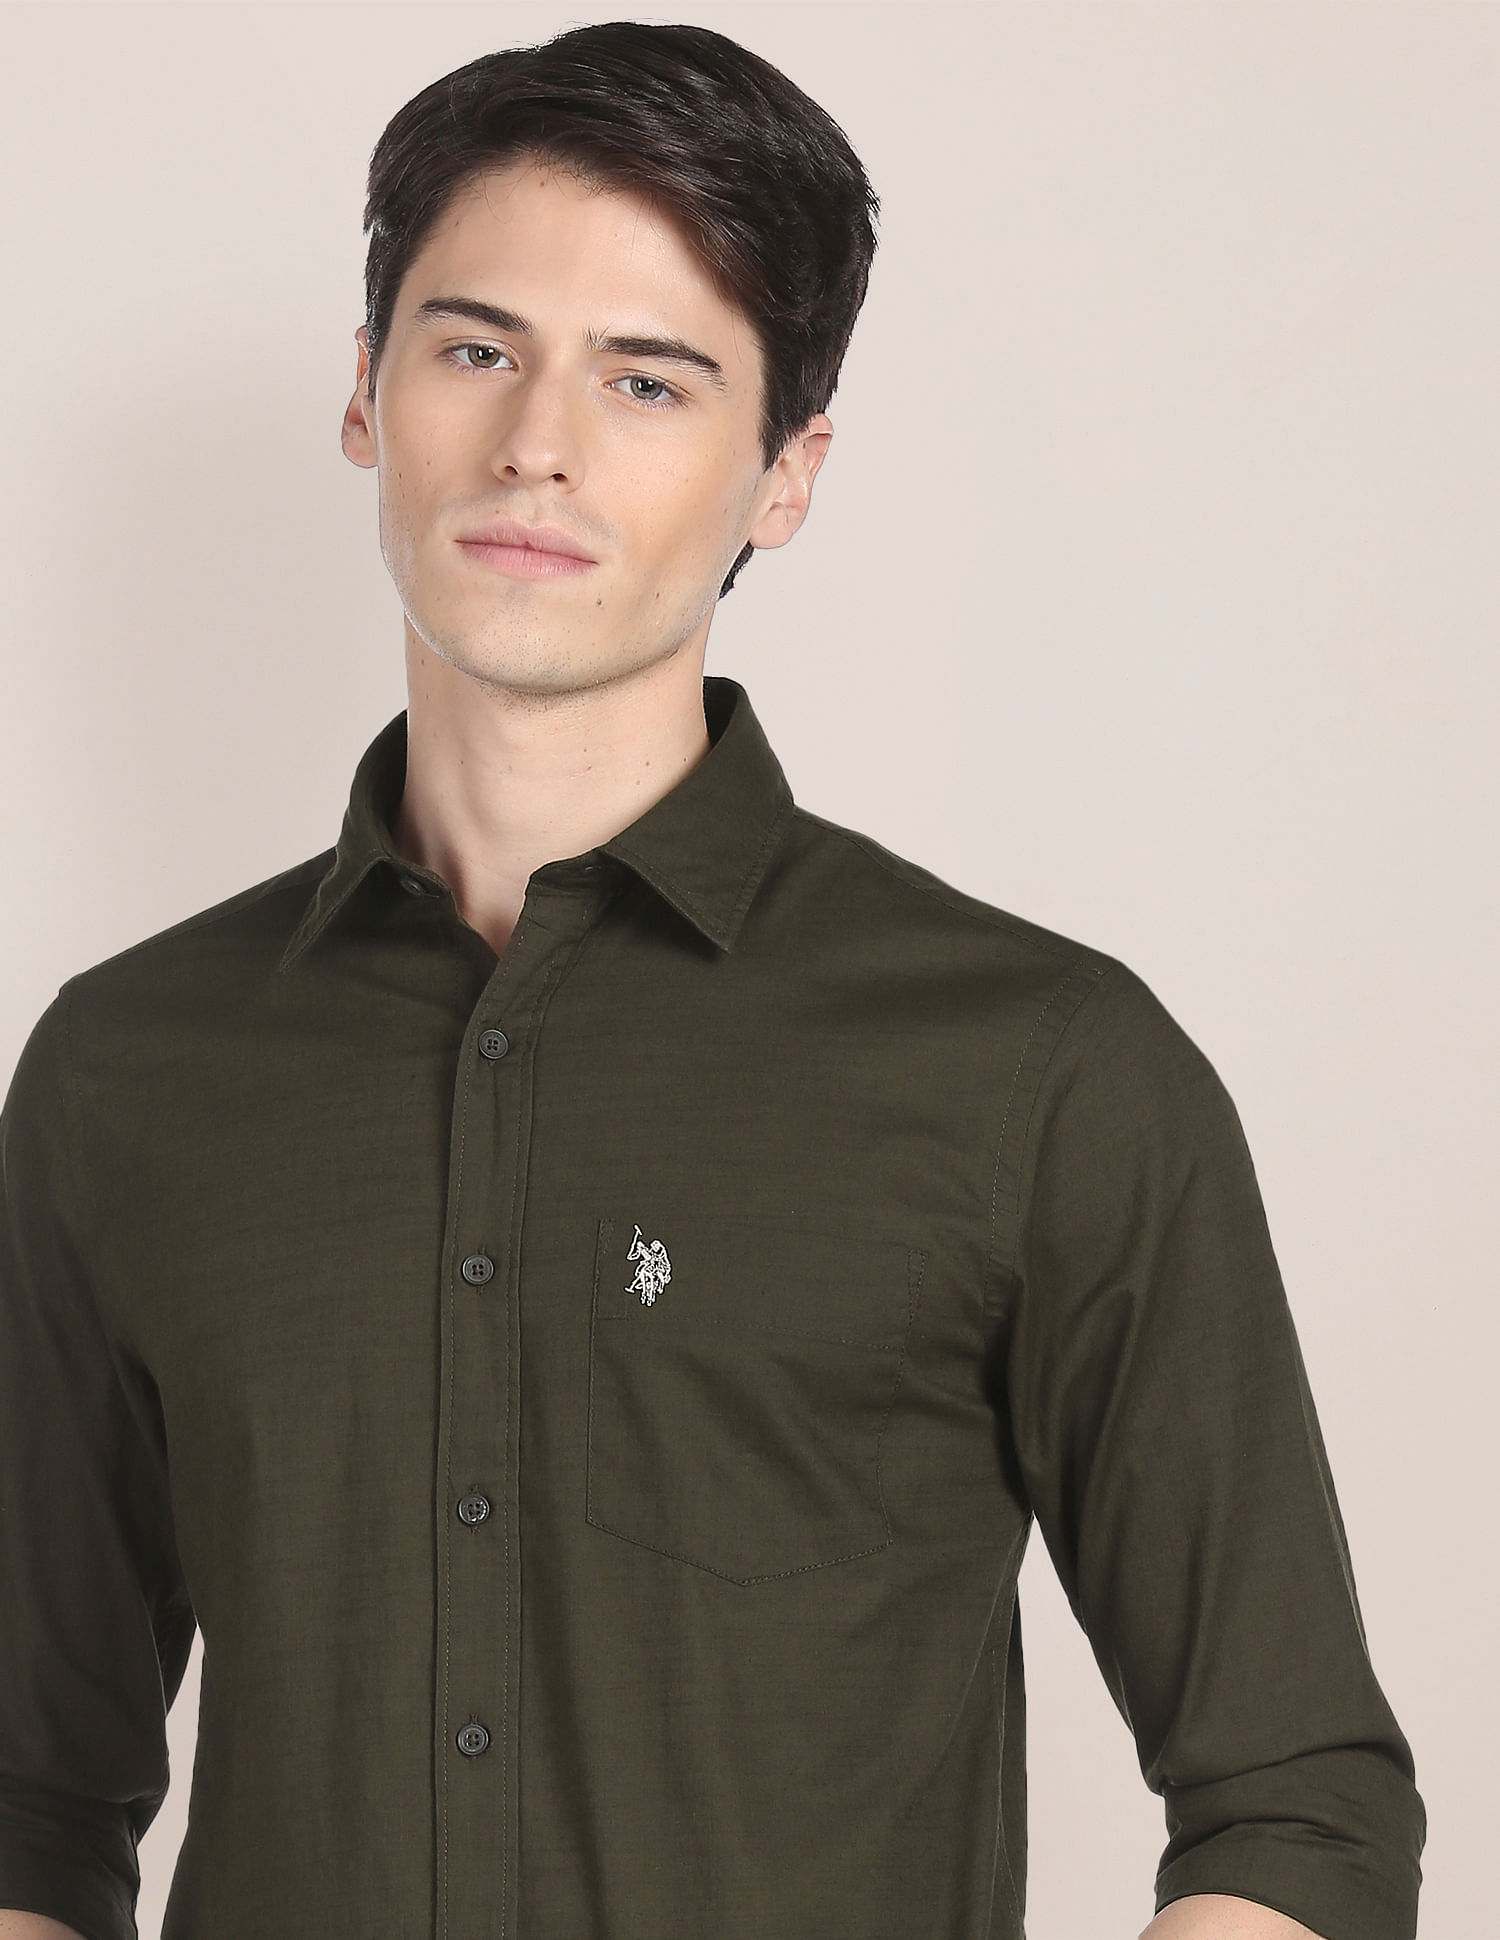 Buy Dark Olive Oxford, Casual Olive Solid Shirts for Men Online